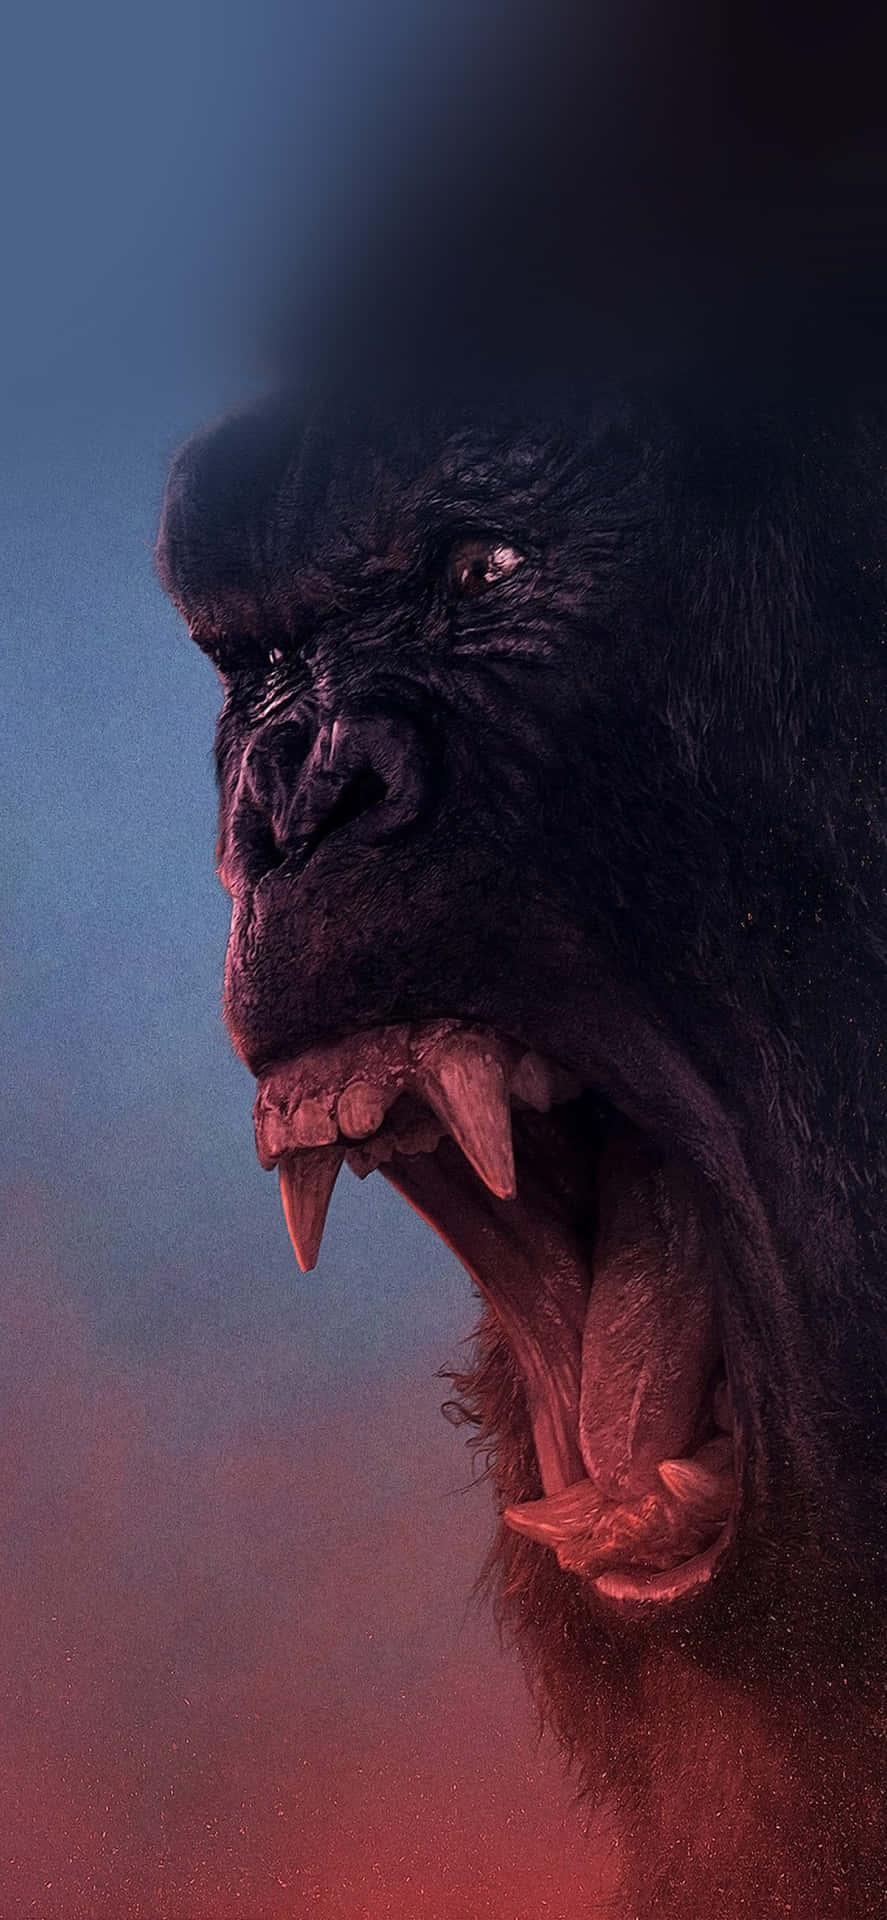 Pósterde King Kong Con La Boca De Un Gorila